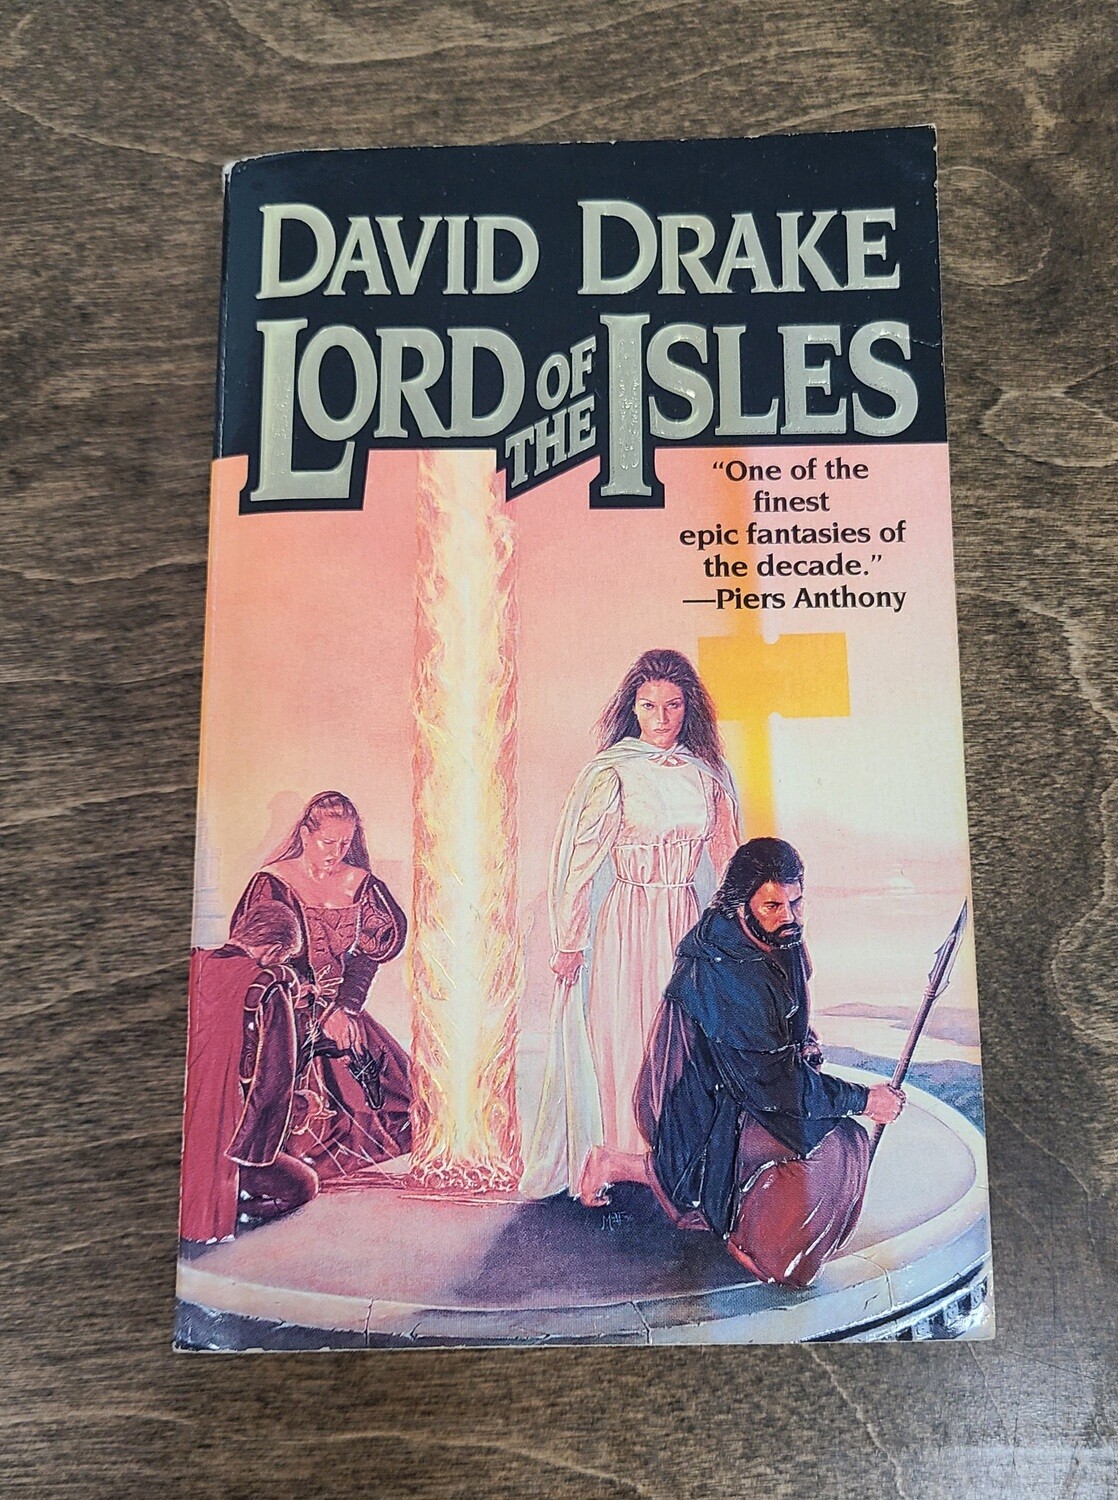 Lord of the Isles by David Drake